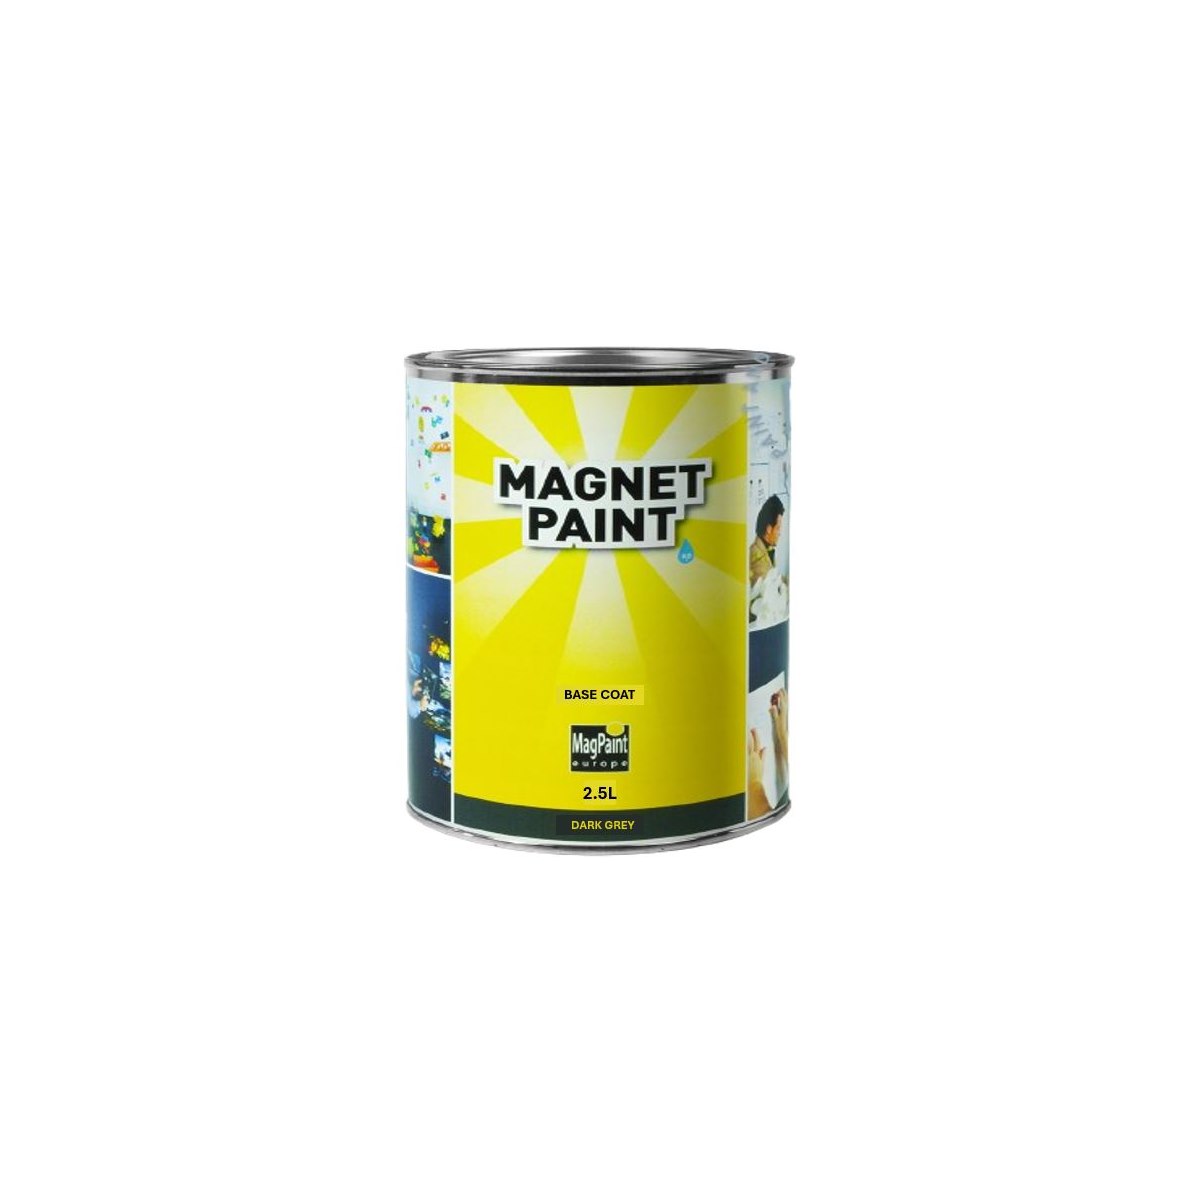 Magnet Paint Dark Grey 2.5L